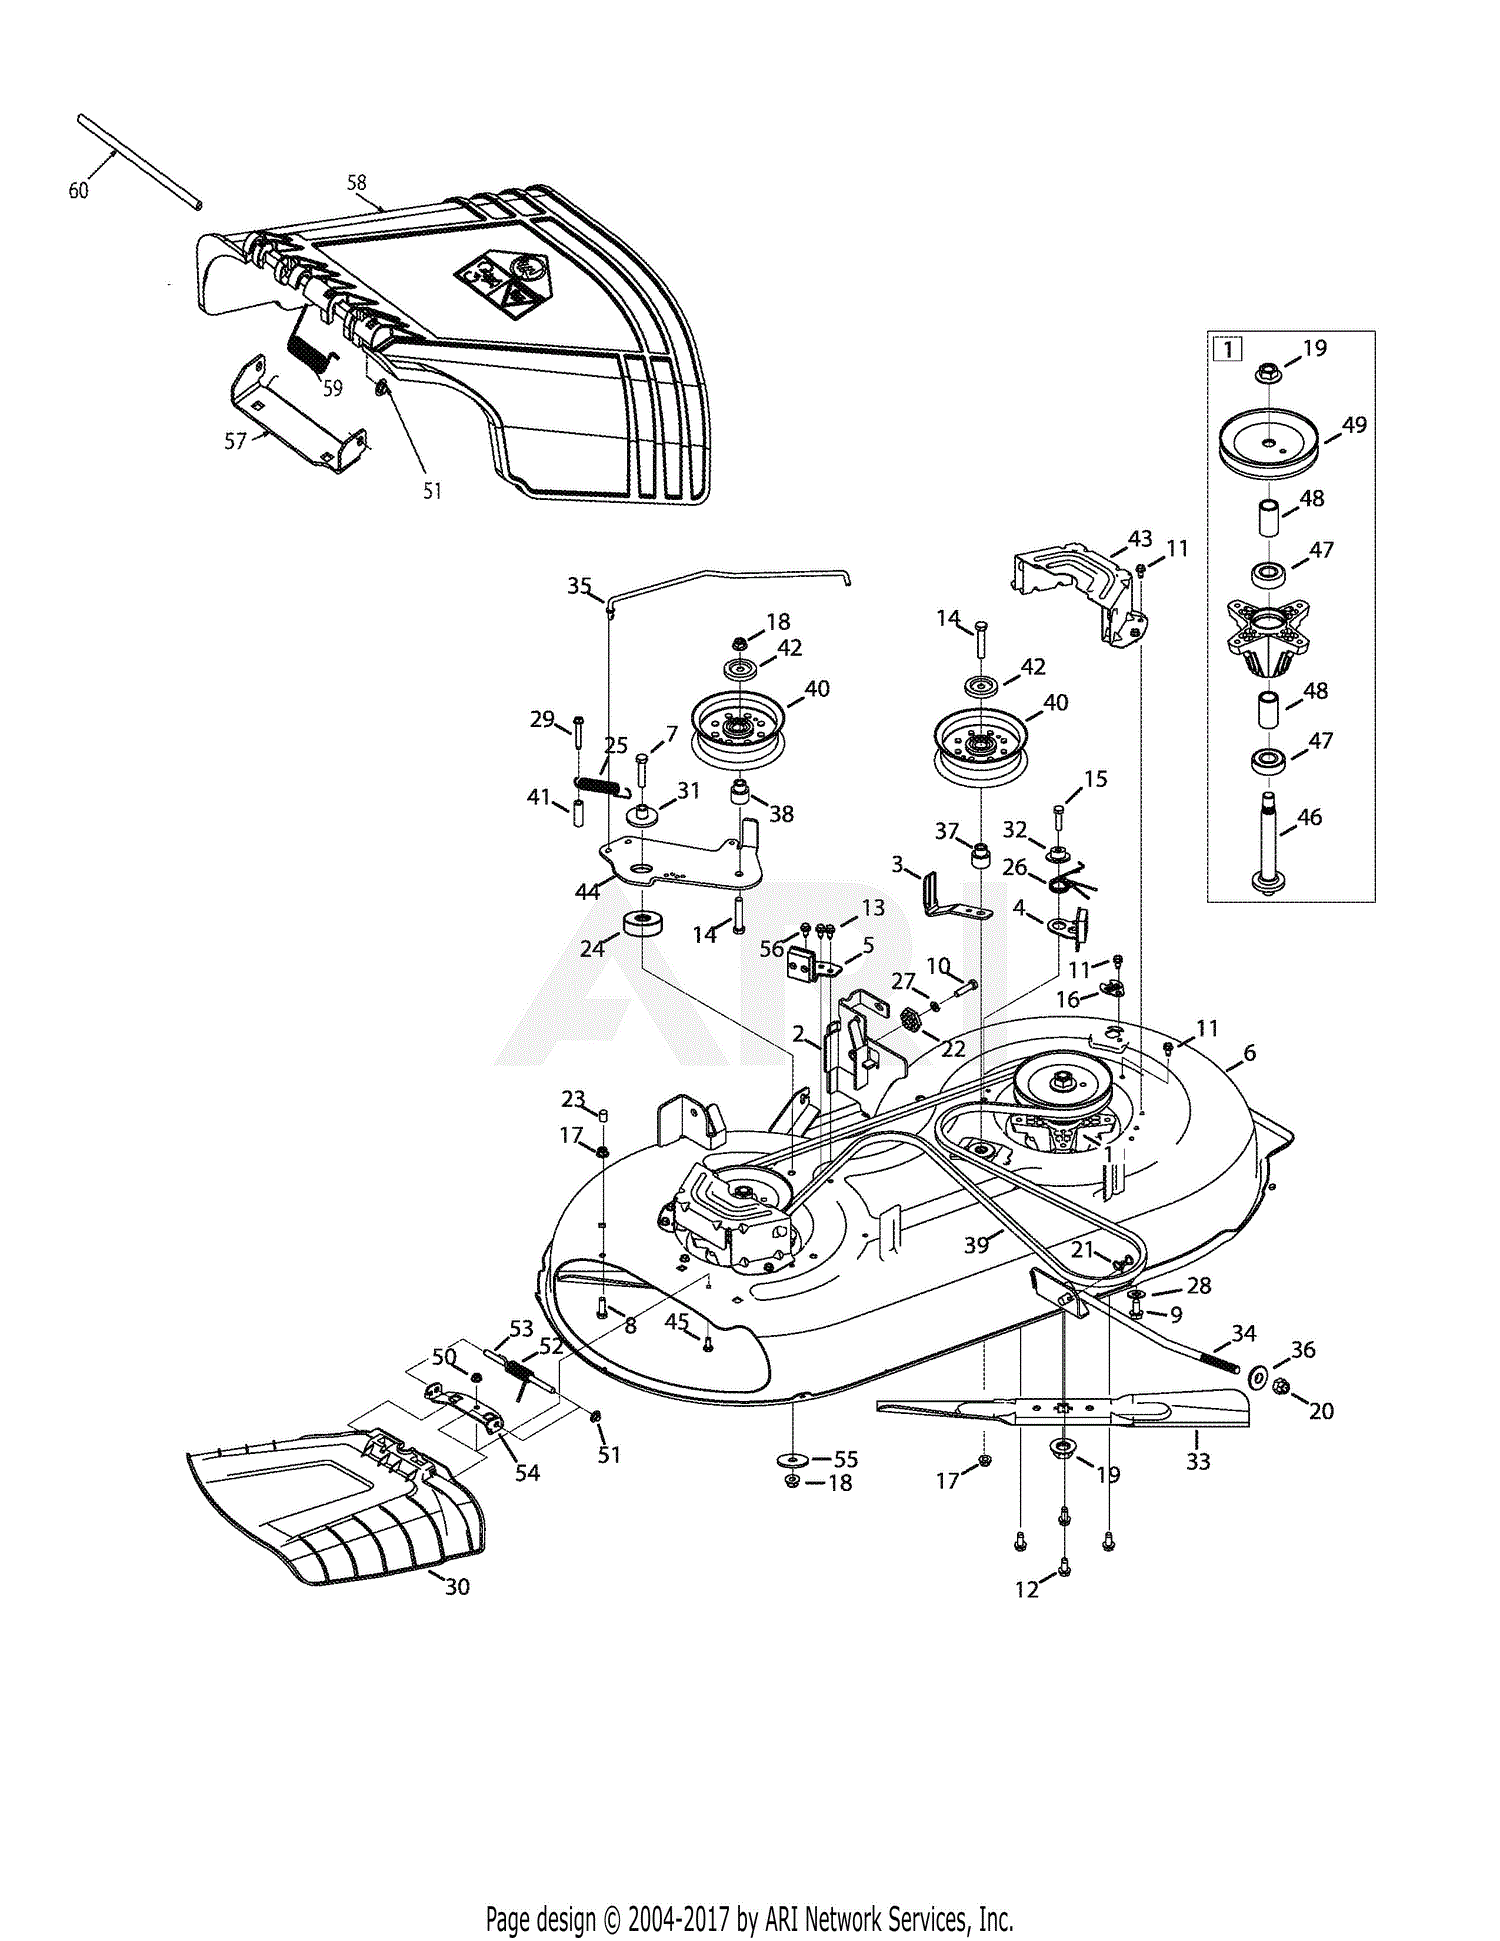 76cf8 Troy Bilt Garden Tractor Manual Wiring Library